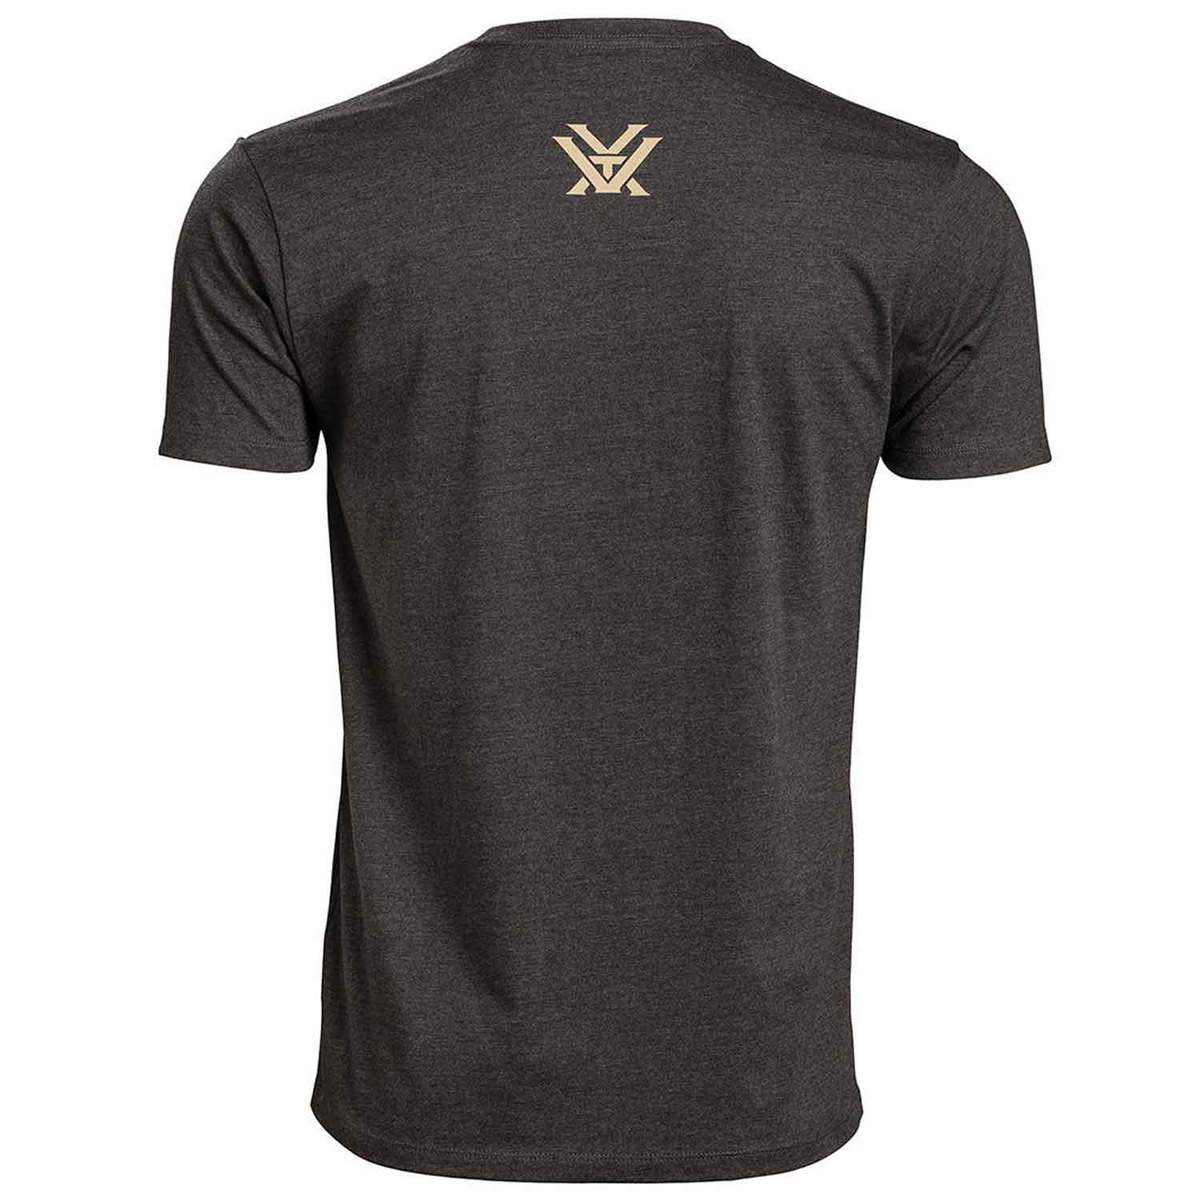 Vortex Men's Full Tine Short Sleeve Shirt - Charcoal Heather - XXL ...